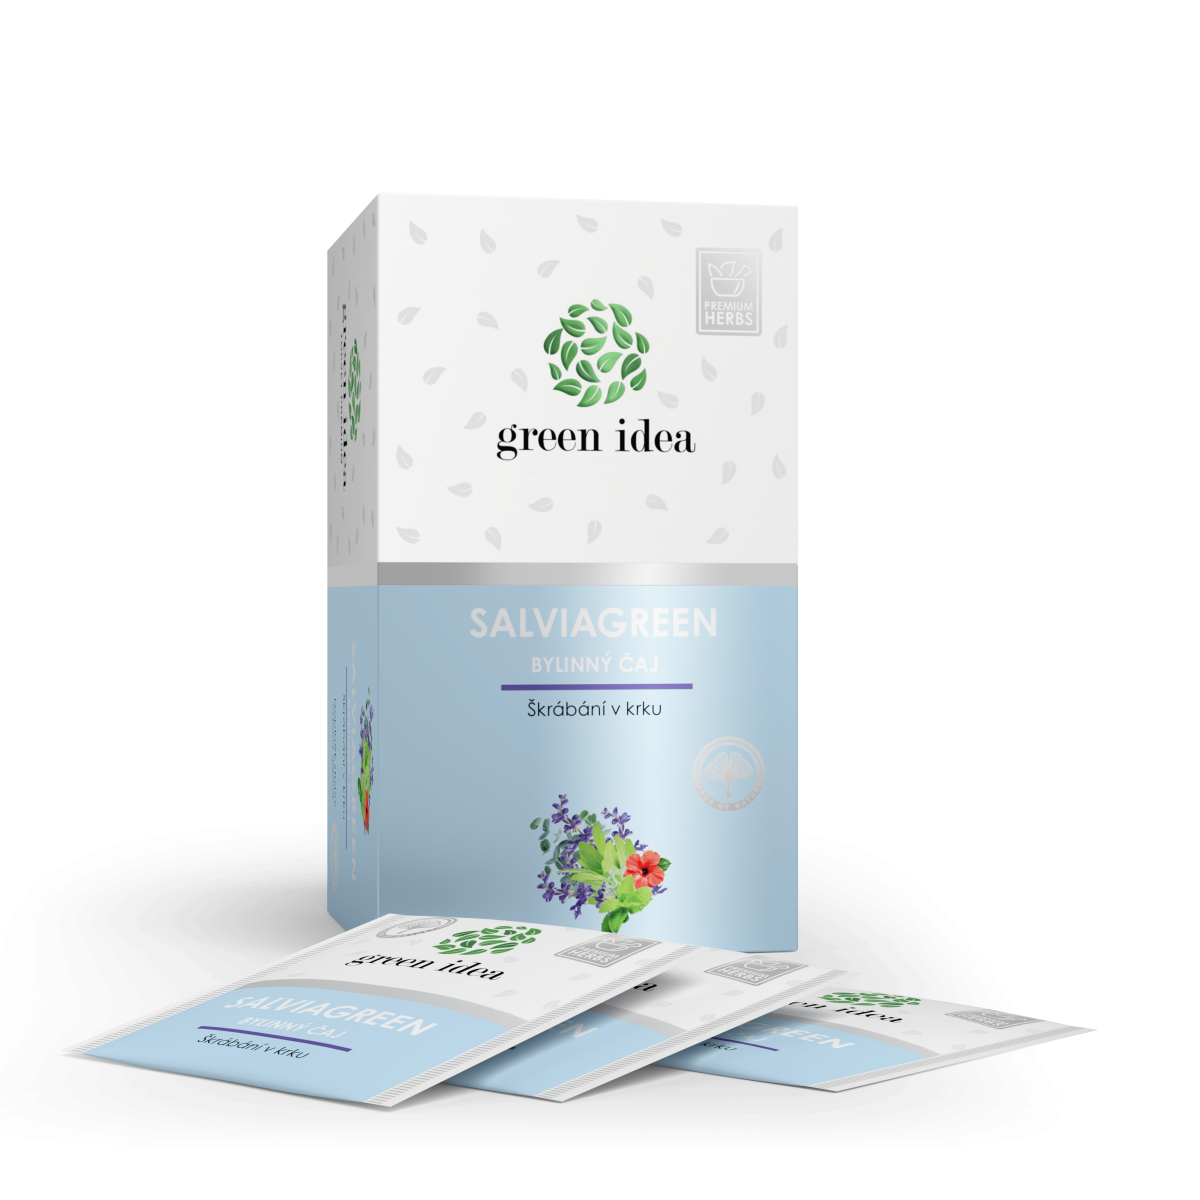 Herbex Salviagreen - bylinný čaj